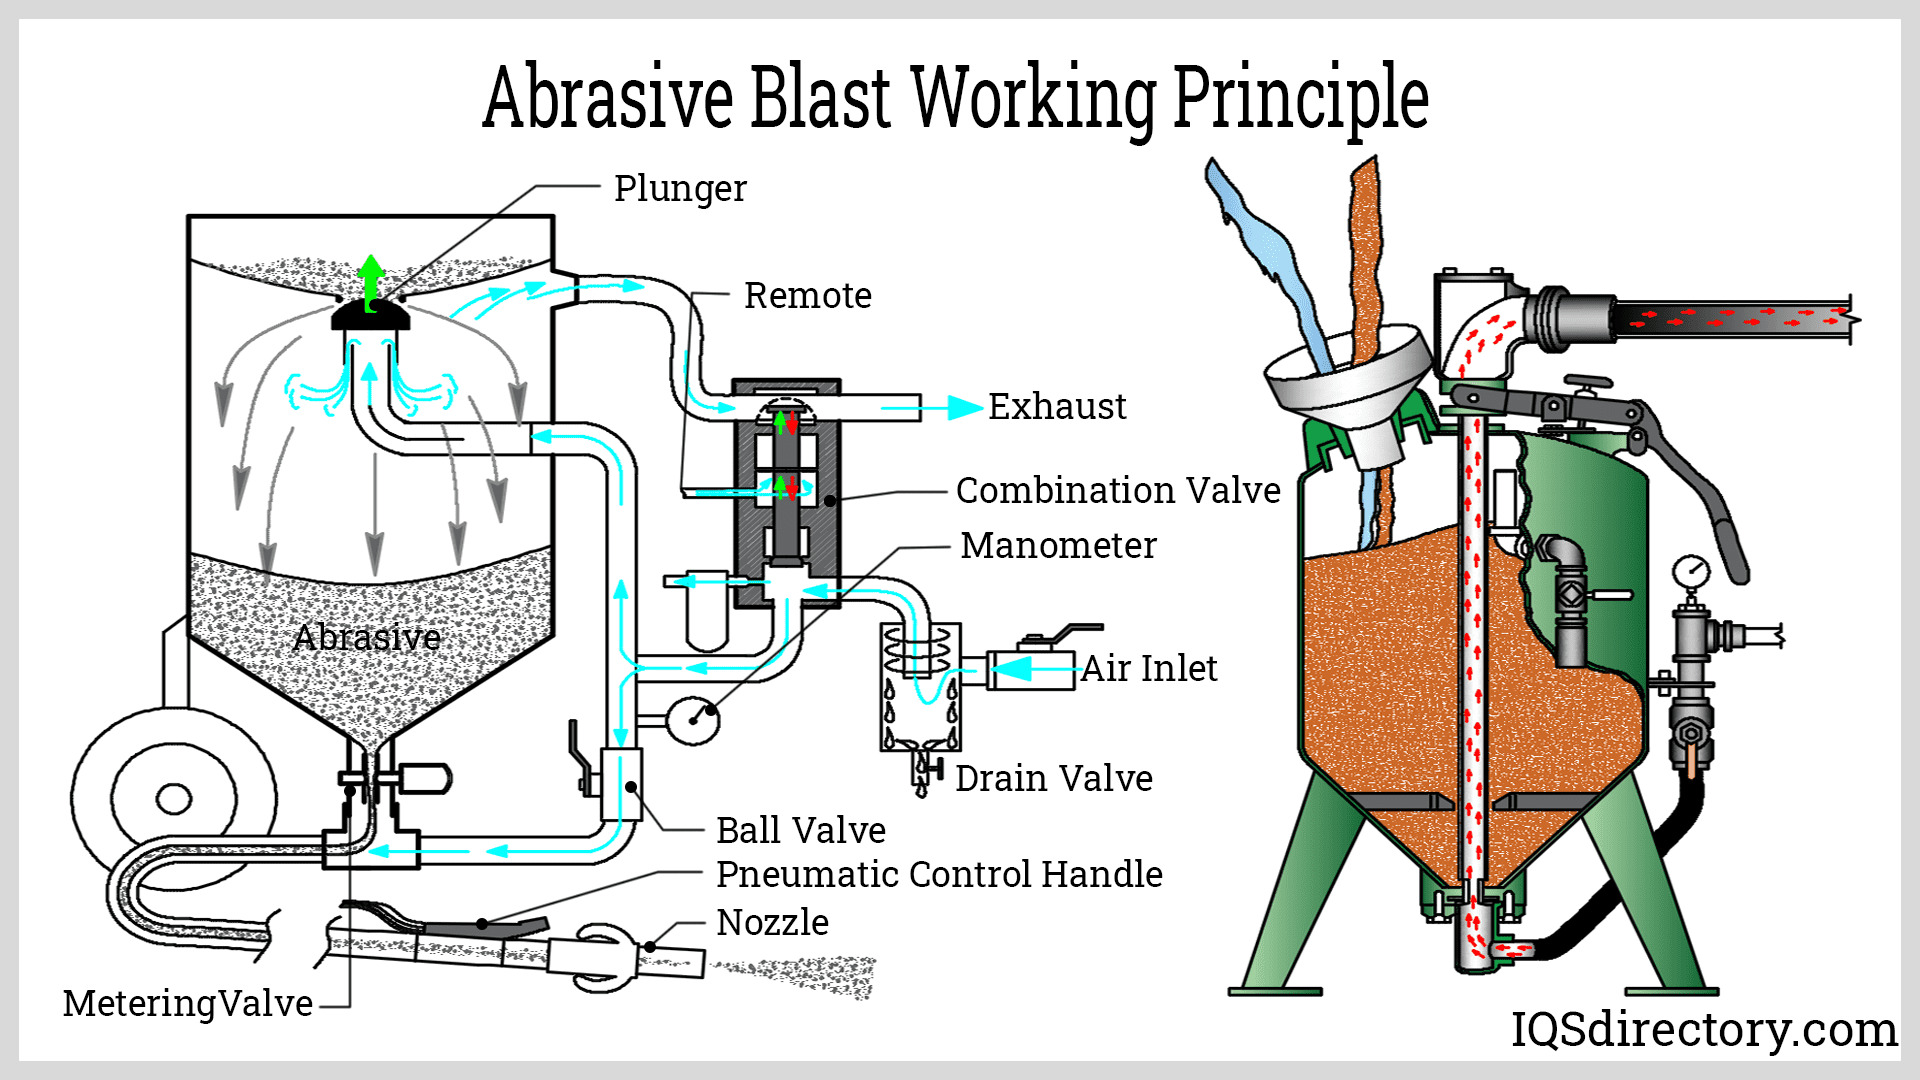 Abrasive Blast working principle